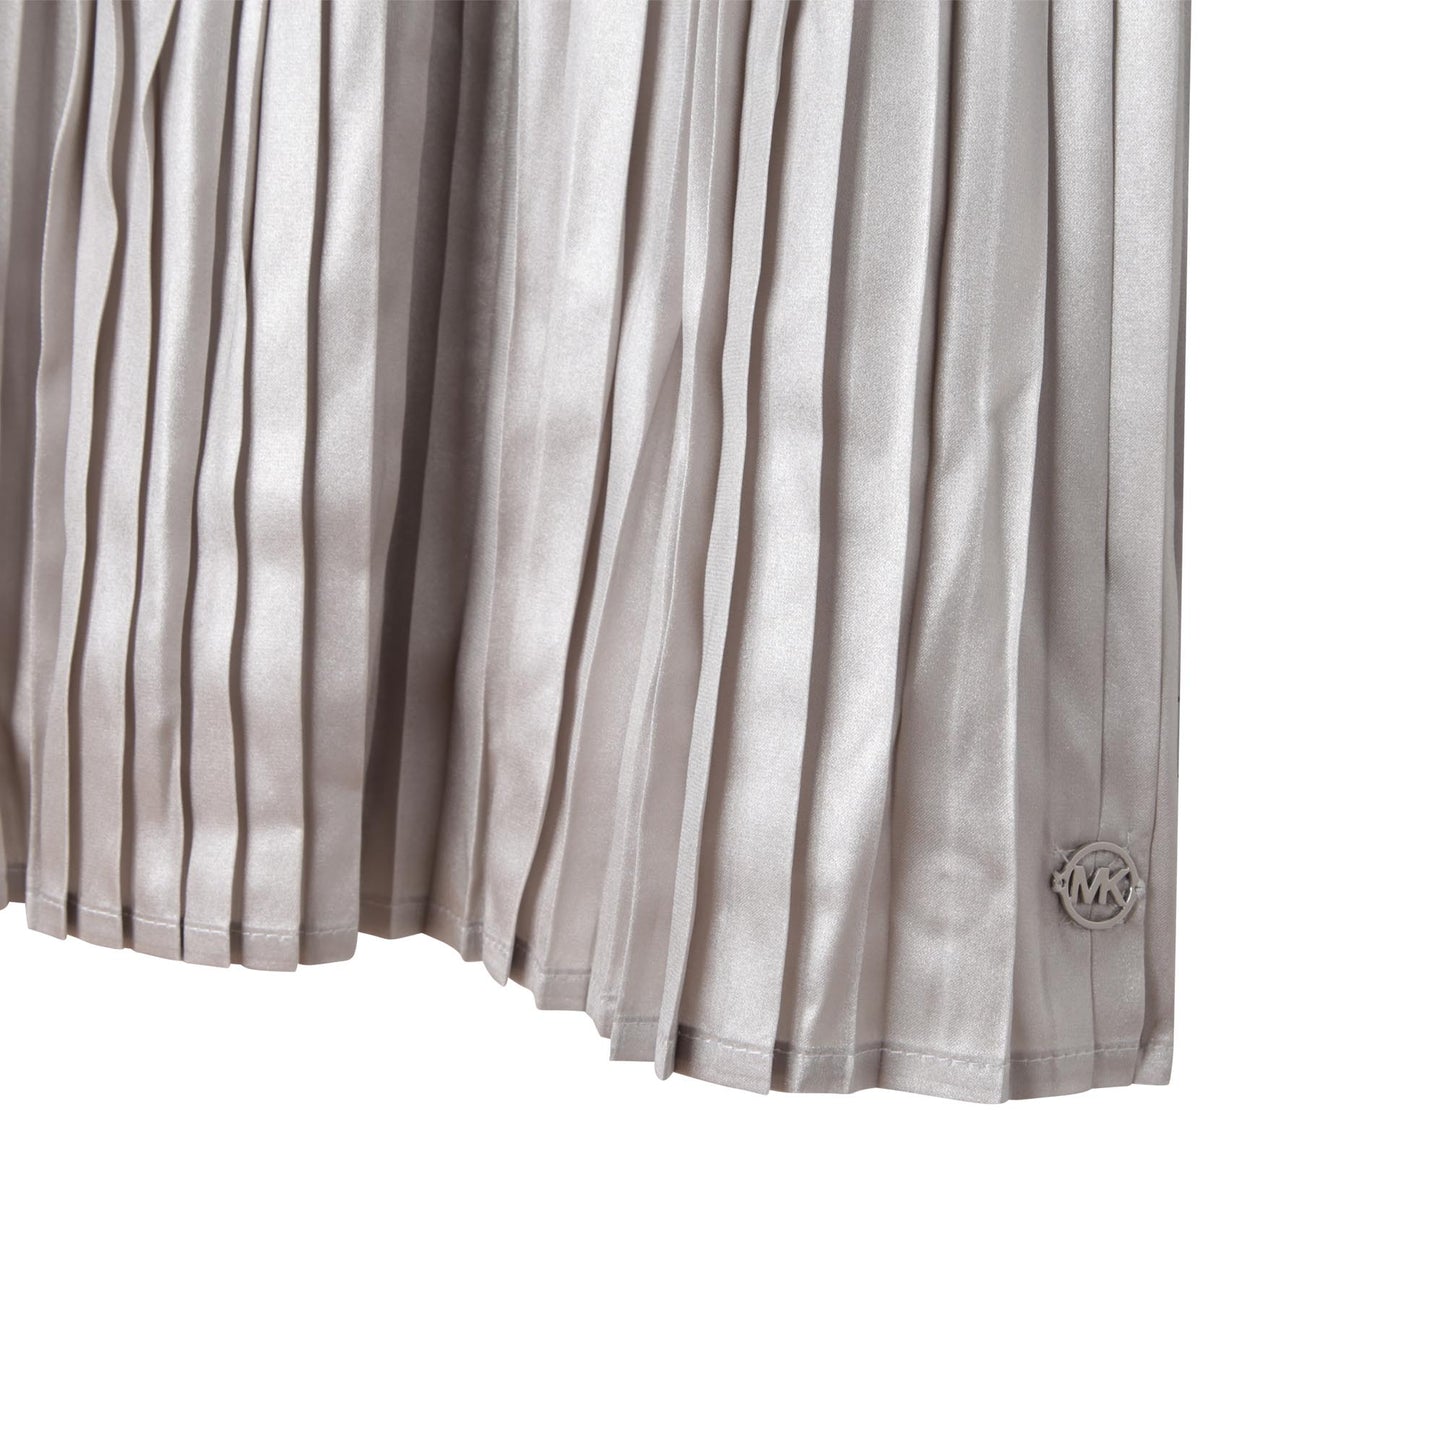 Michael Kors Sleeveless Midi Metallic Pleated Dress _Silver R12144-16